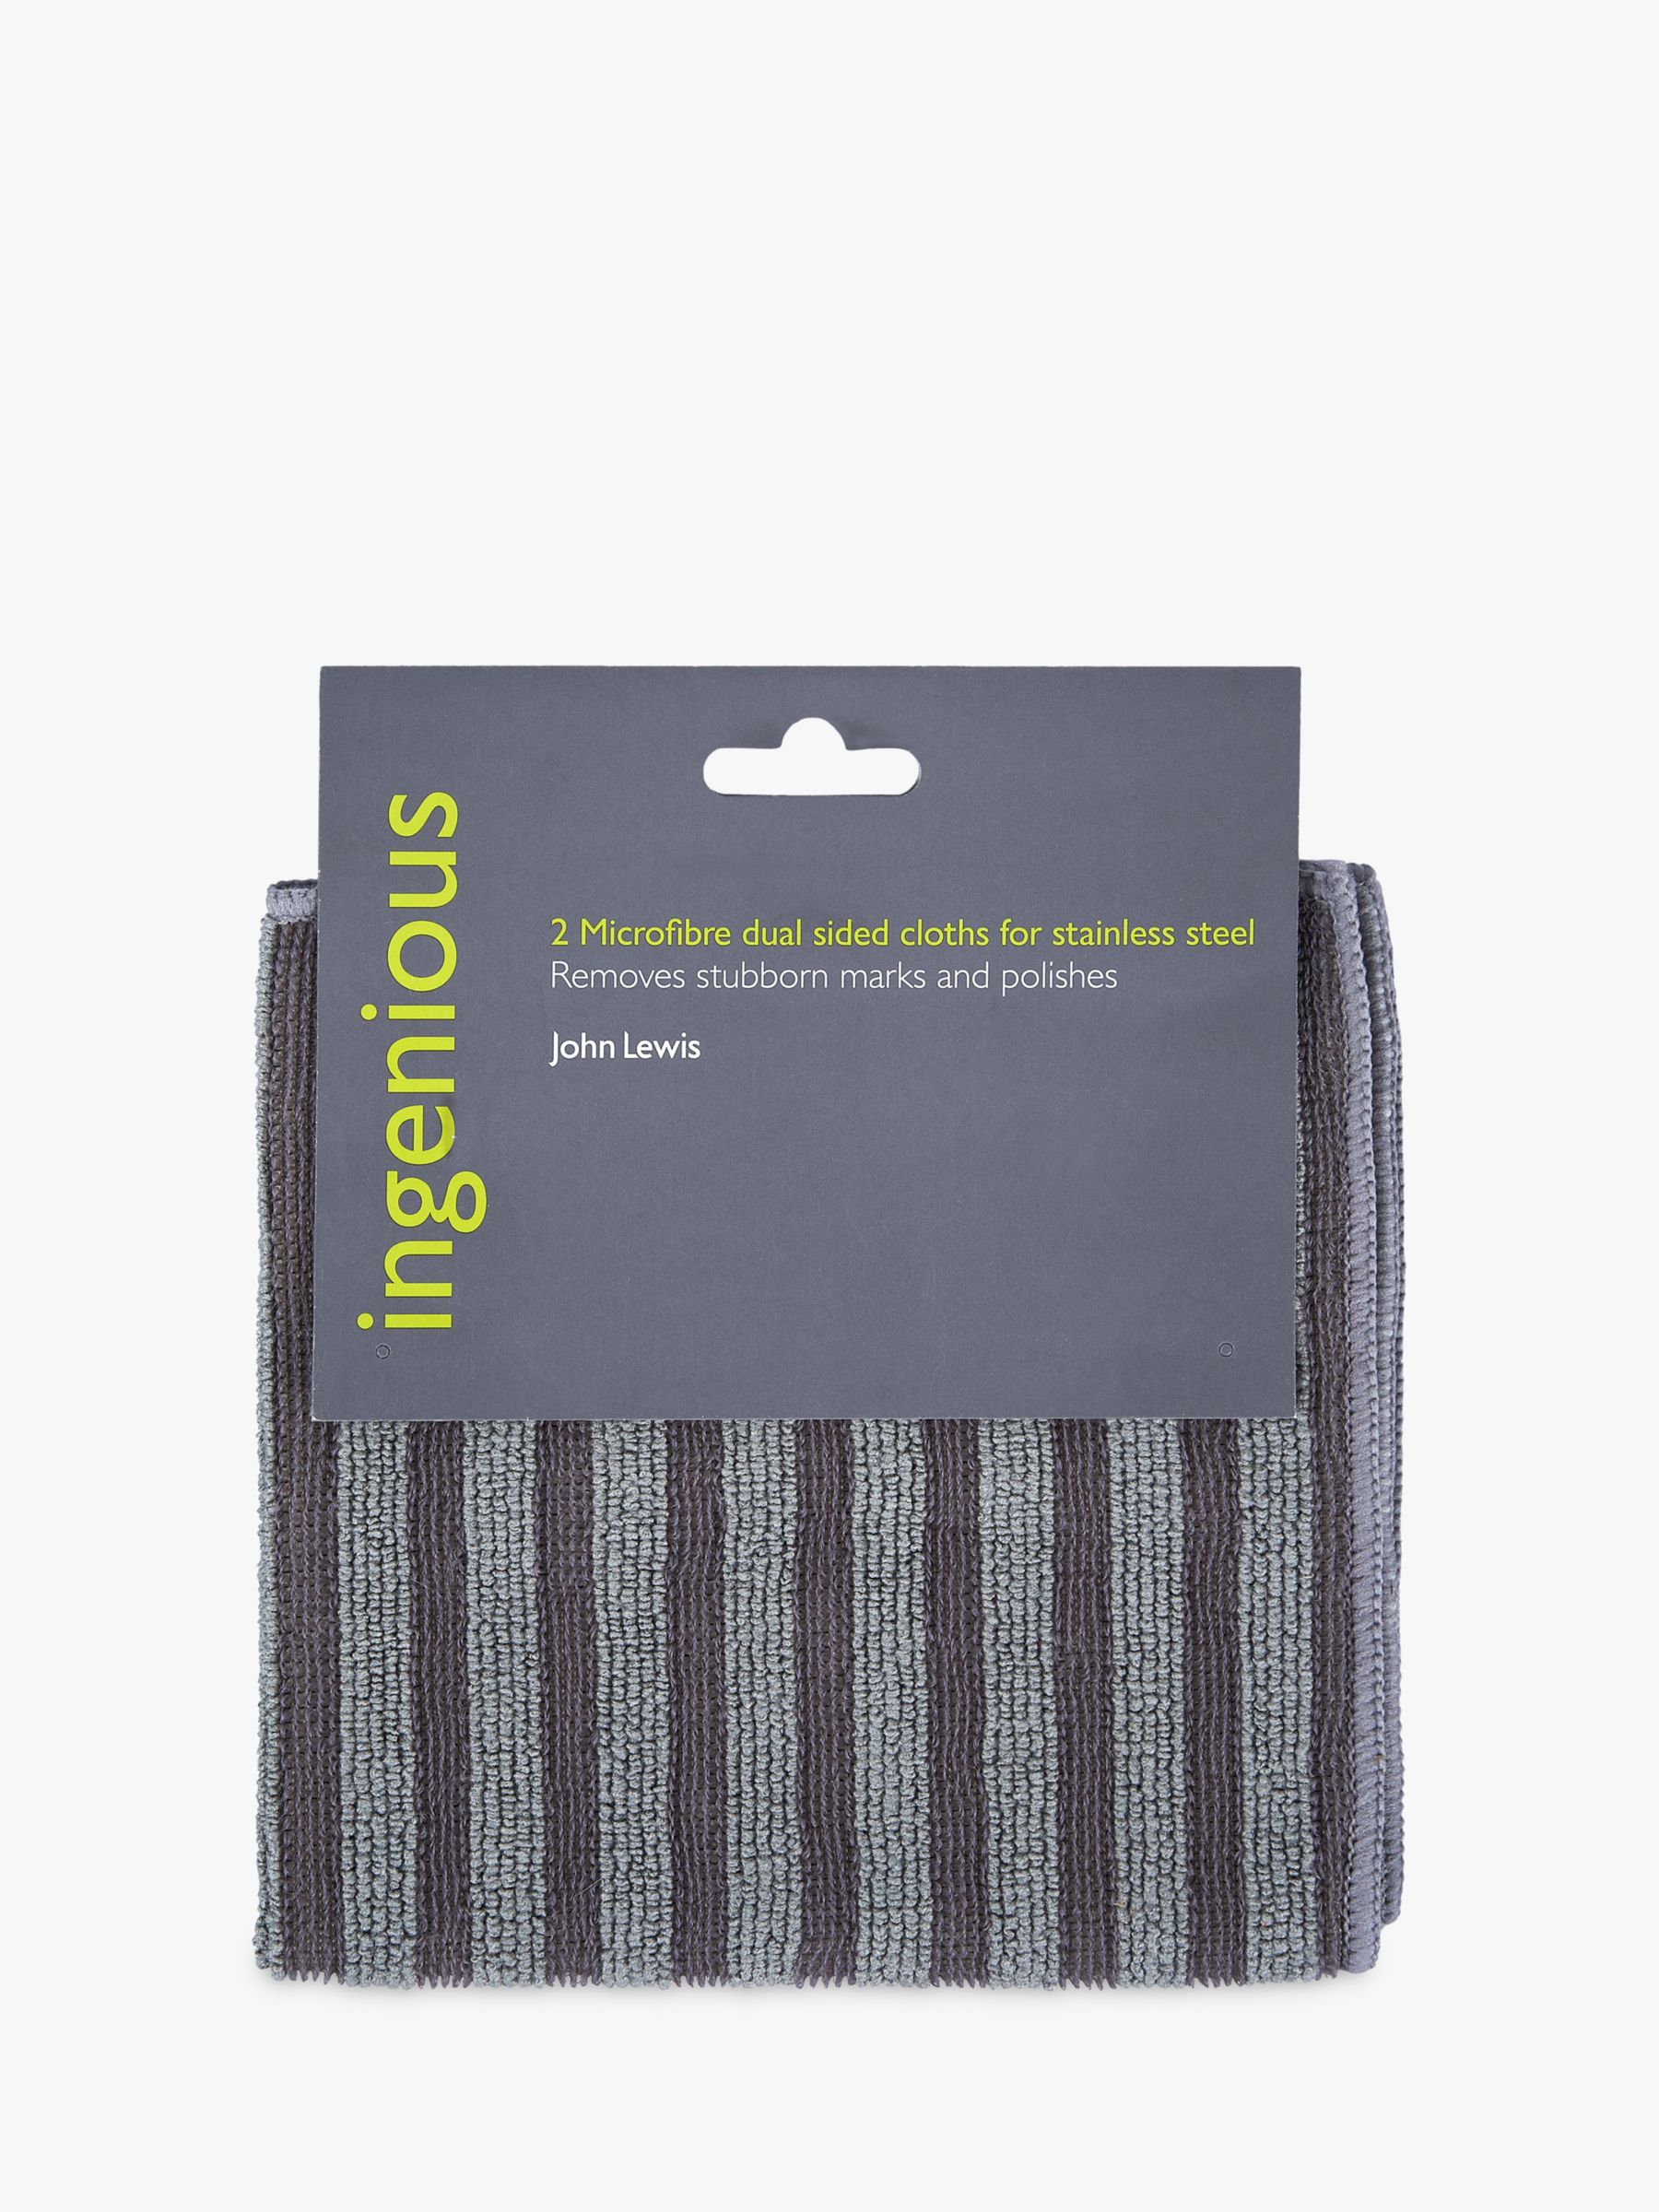 John Lewis Ingenious Microfibre Stainless Steel Cloth